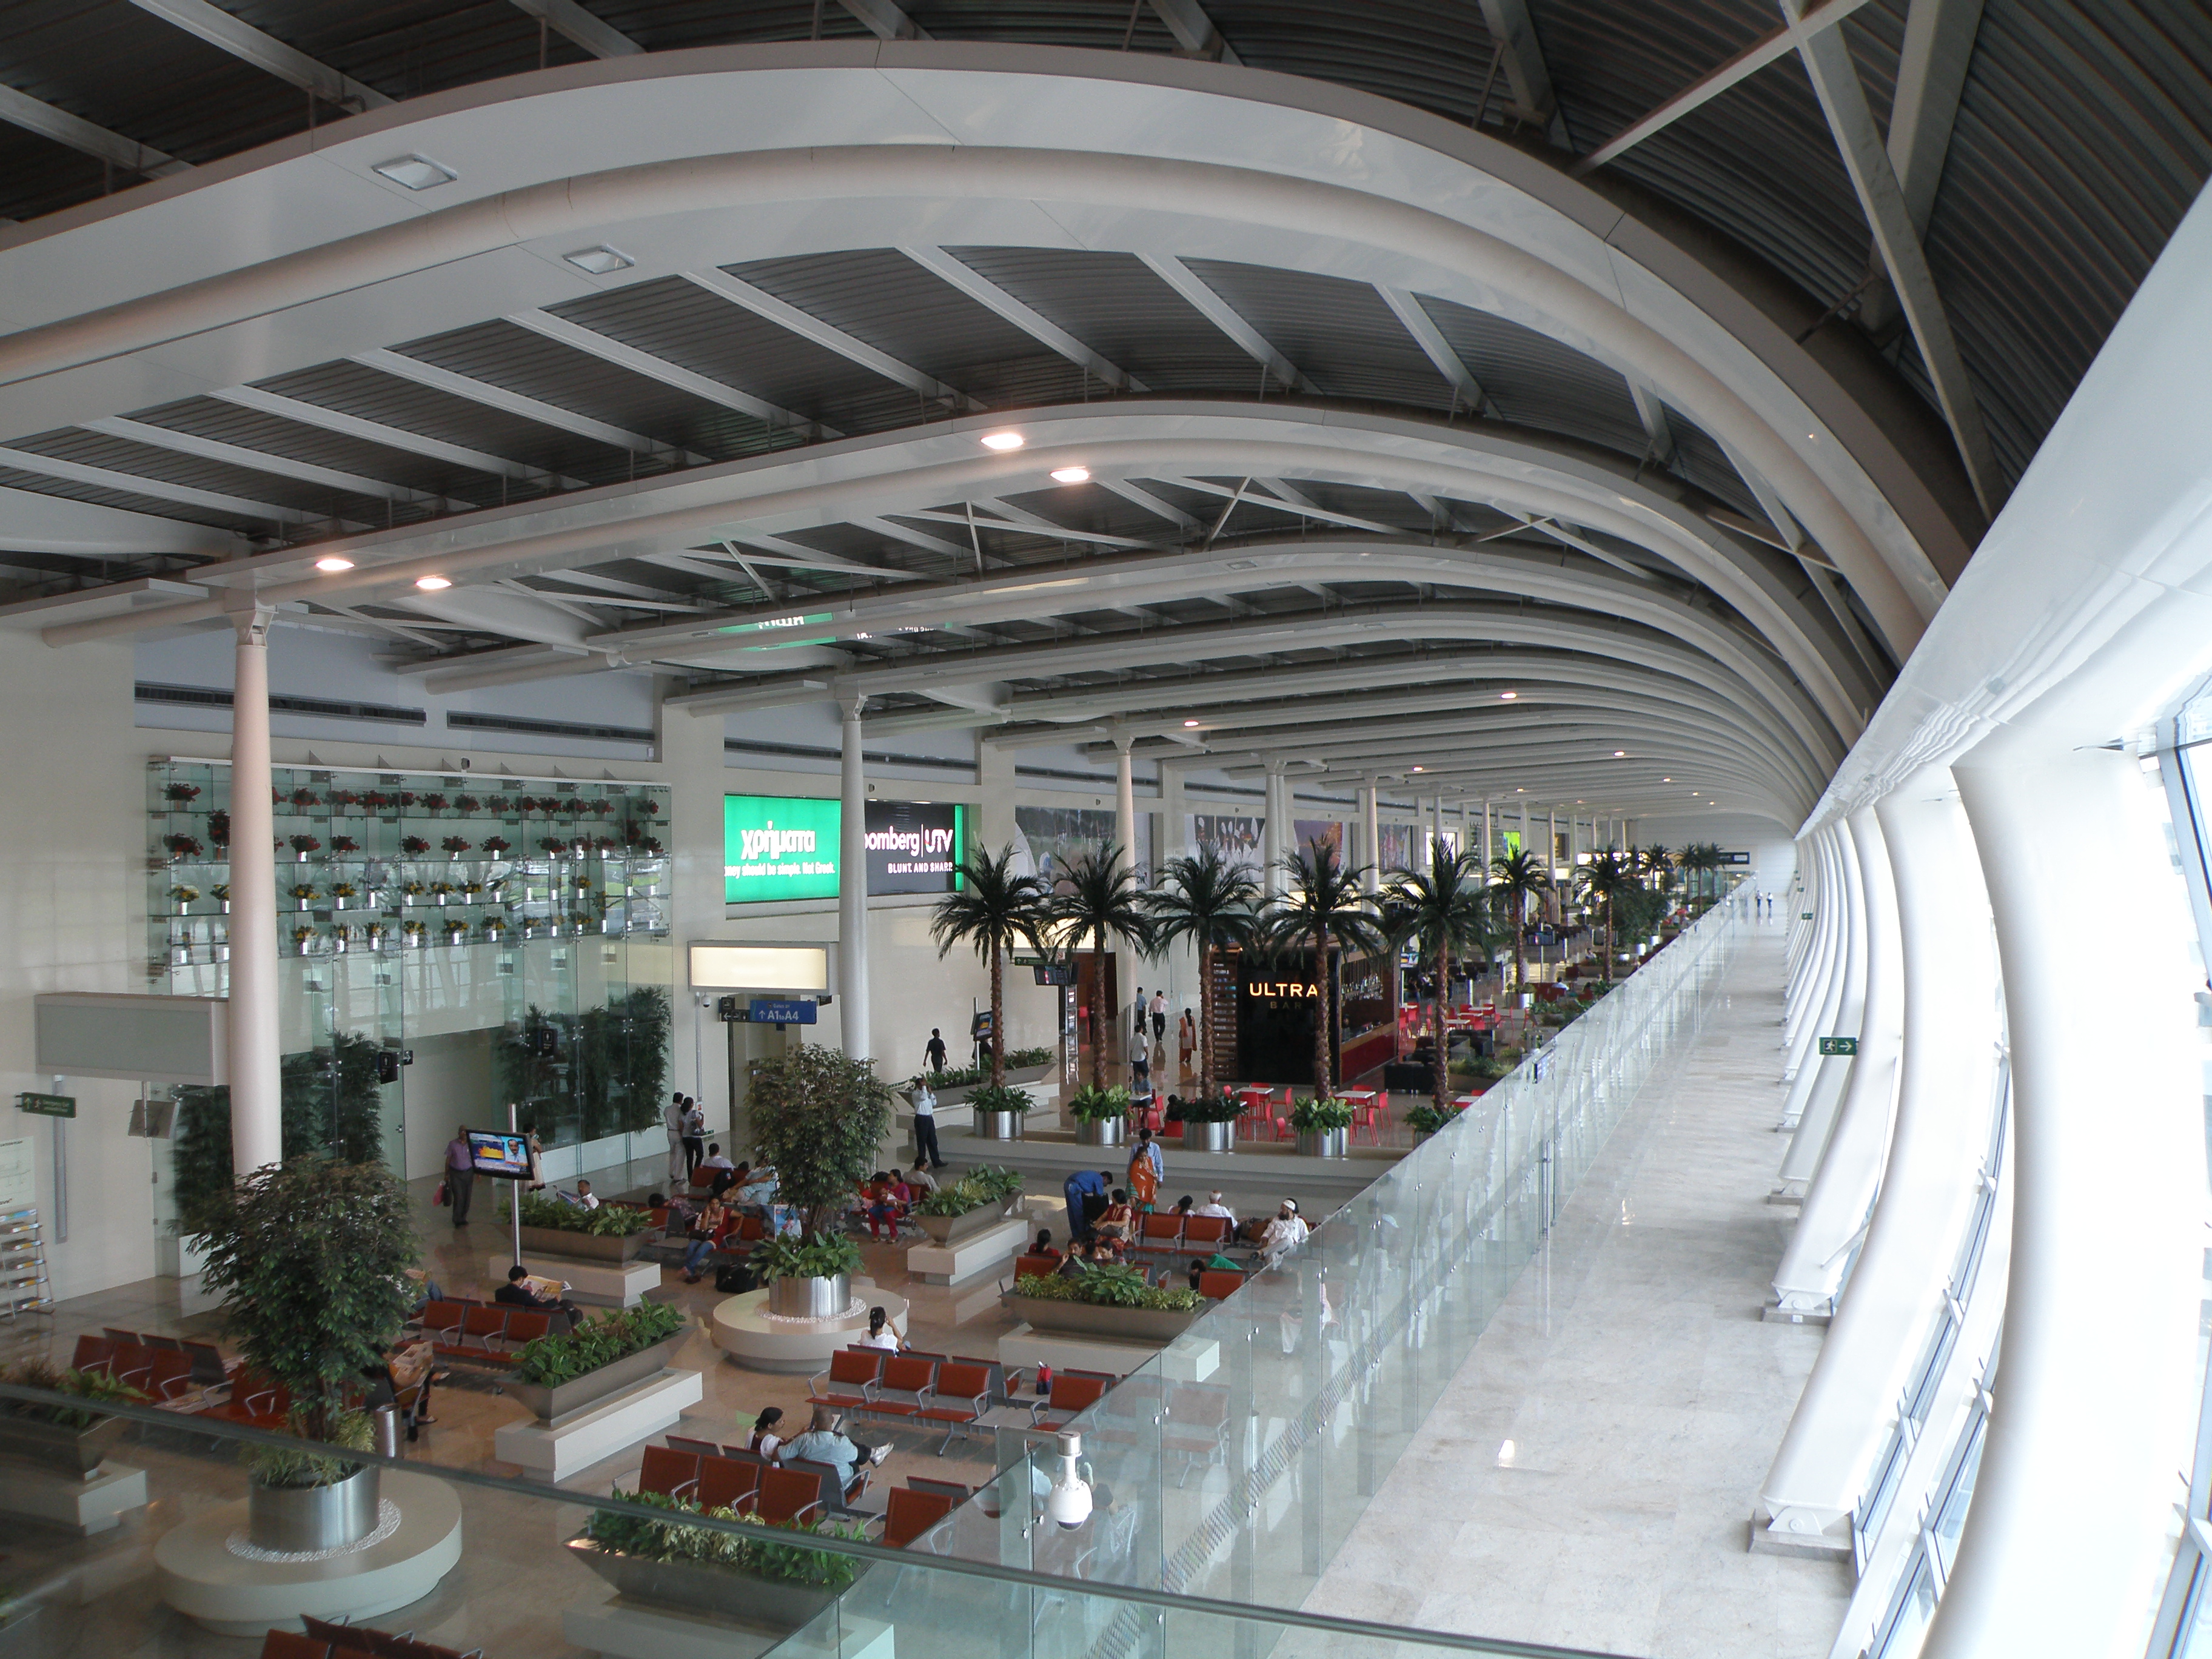 Mumbai airport domestic departure terminal 1C (8)